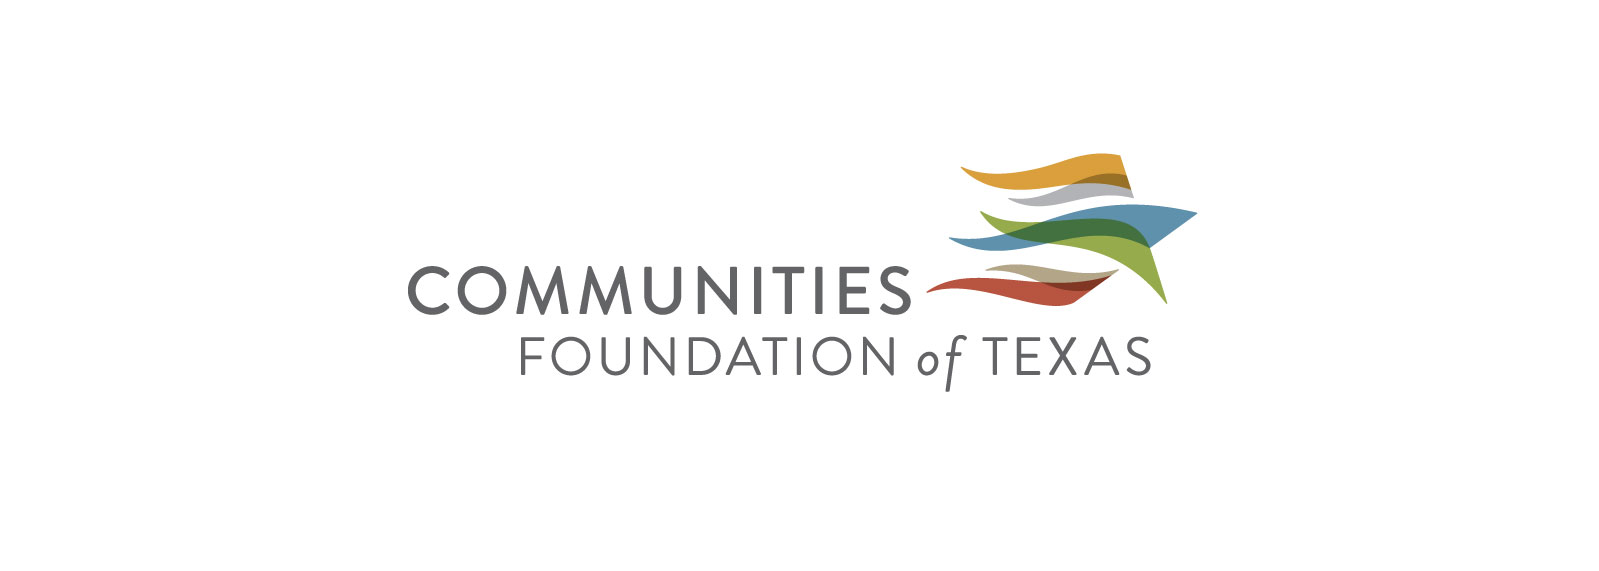 Communities Foundation of Texas receives US$1 million donation